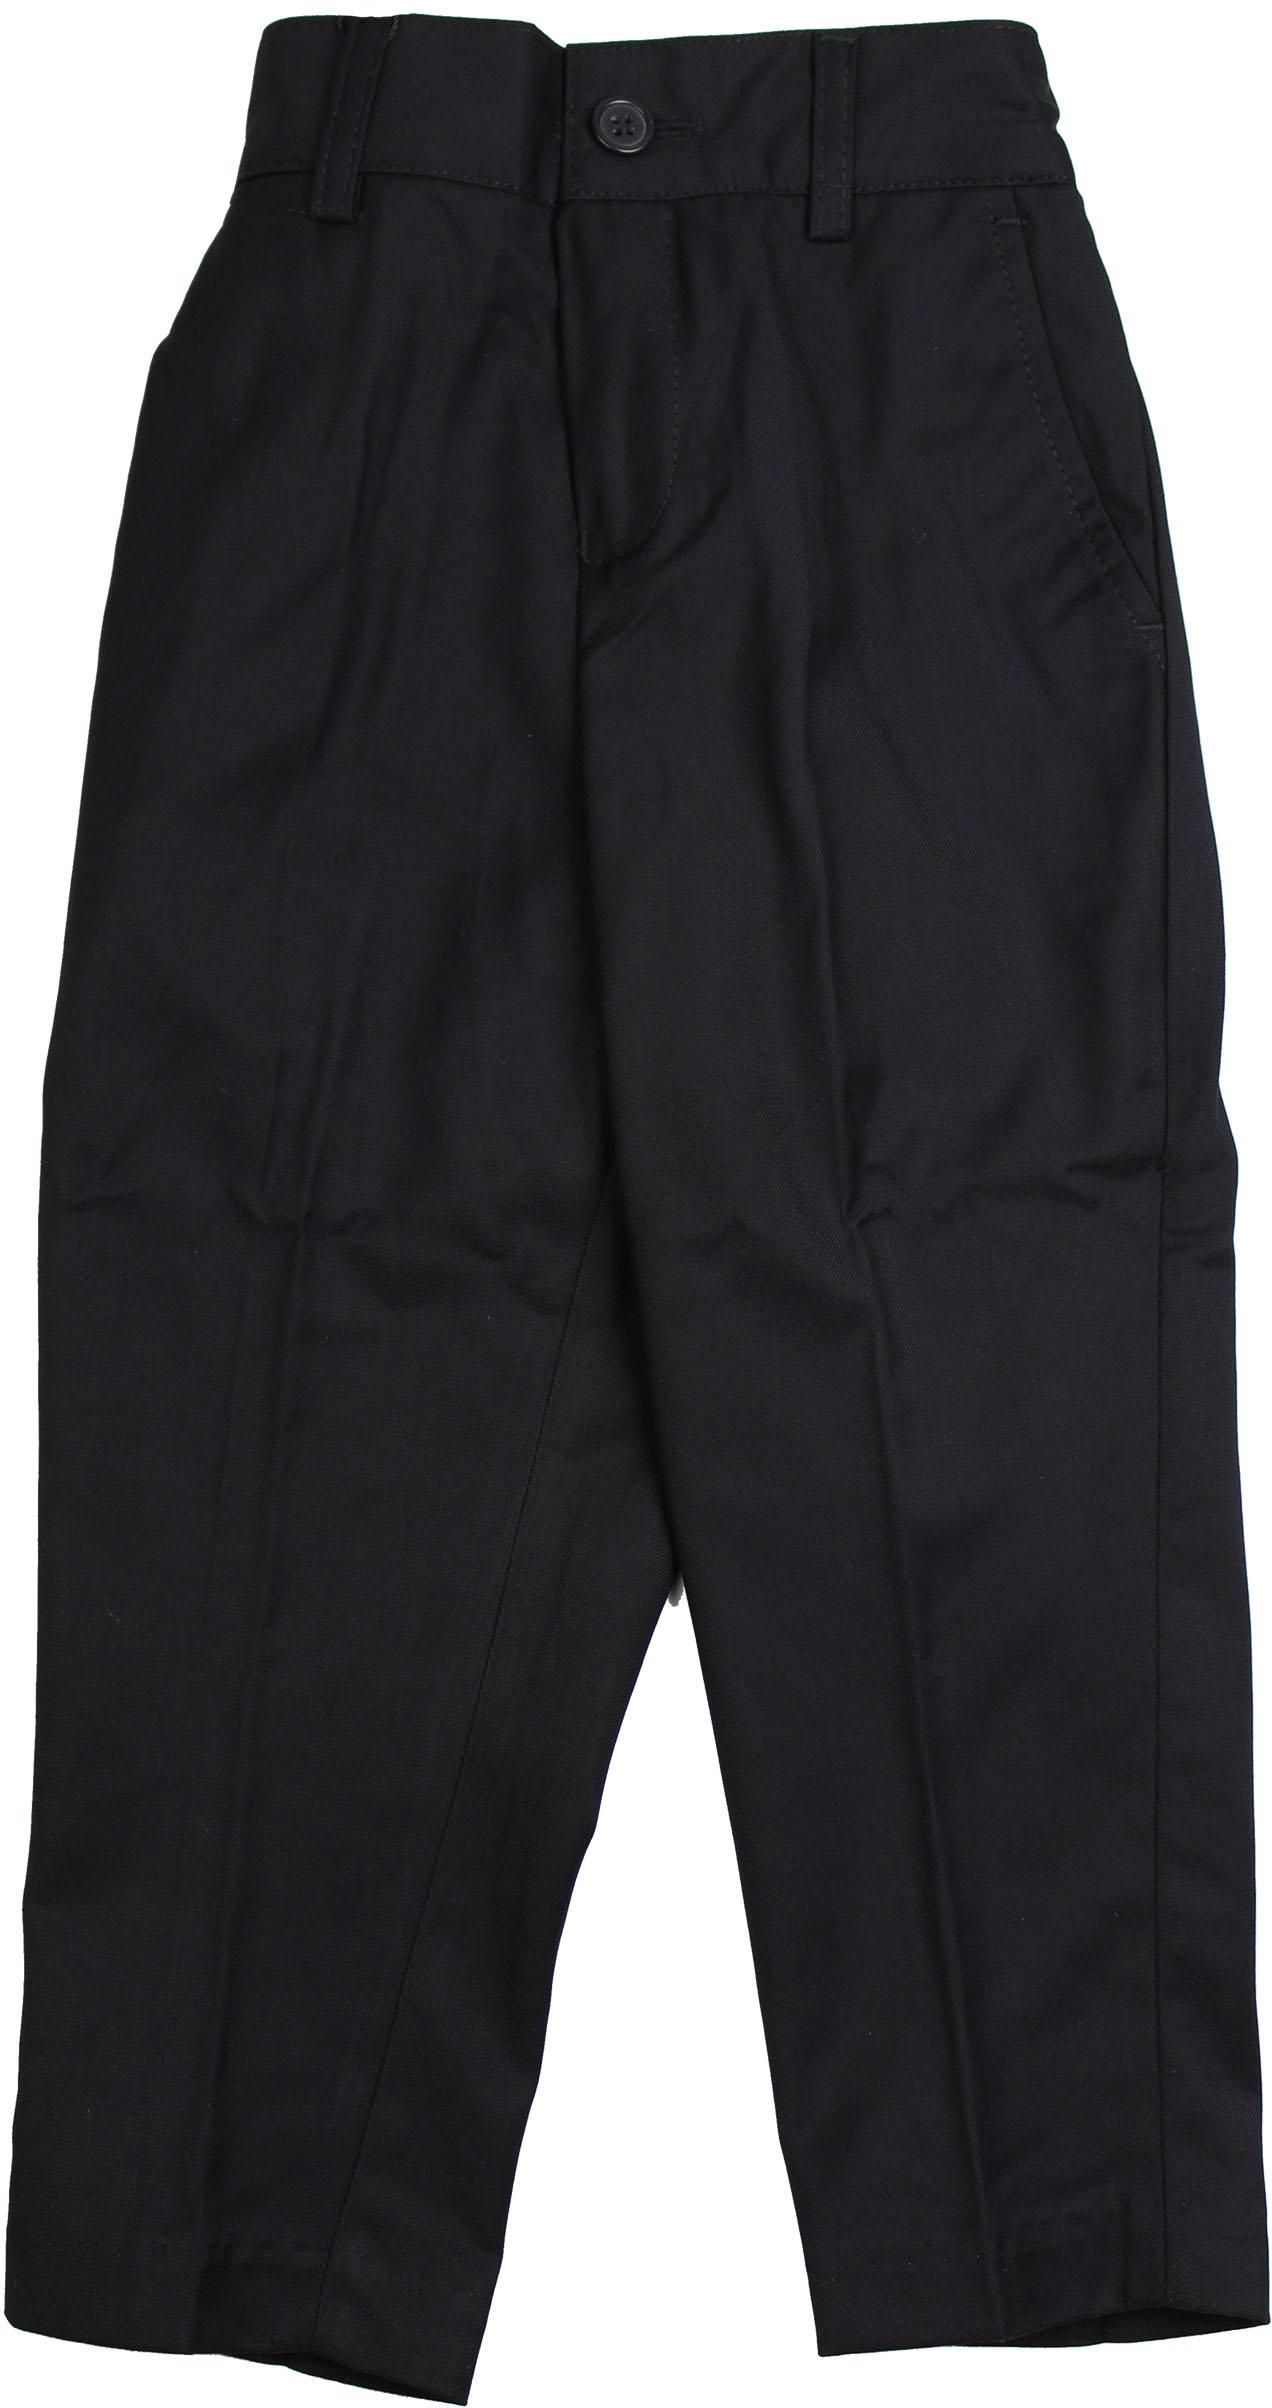 Armani Martillo Boys Flat Front Elastic Waist Husky Dress Pants 606P | eBay